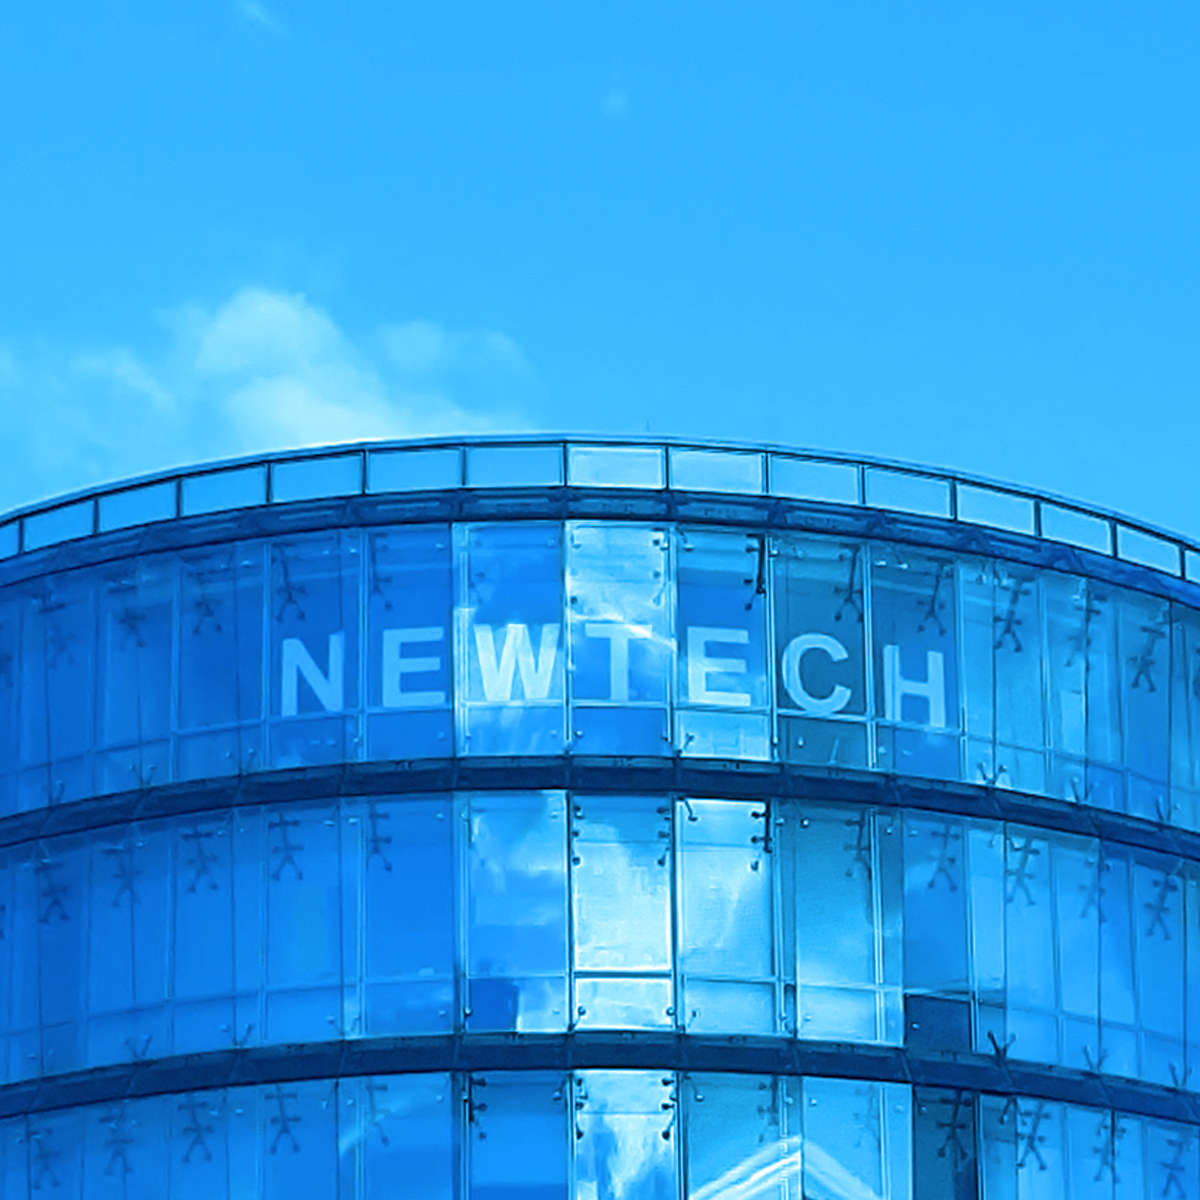 Newtech - napis na budynku CN Experyment // mat. prasowe